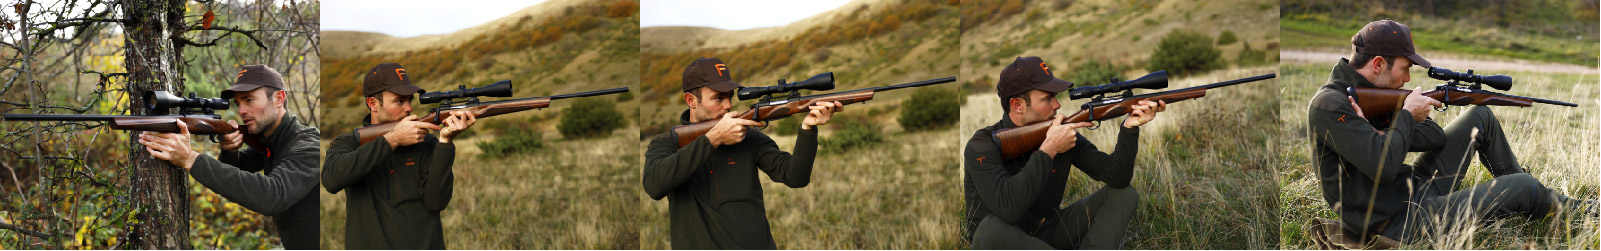 Among our new hunting firearms: Horizon Wood